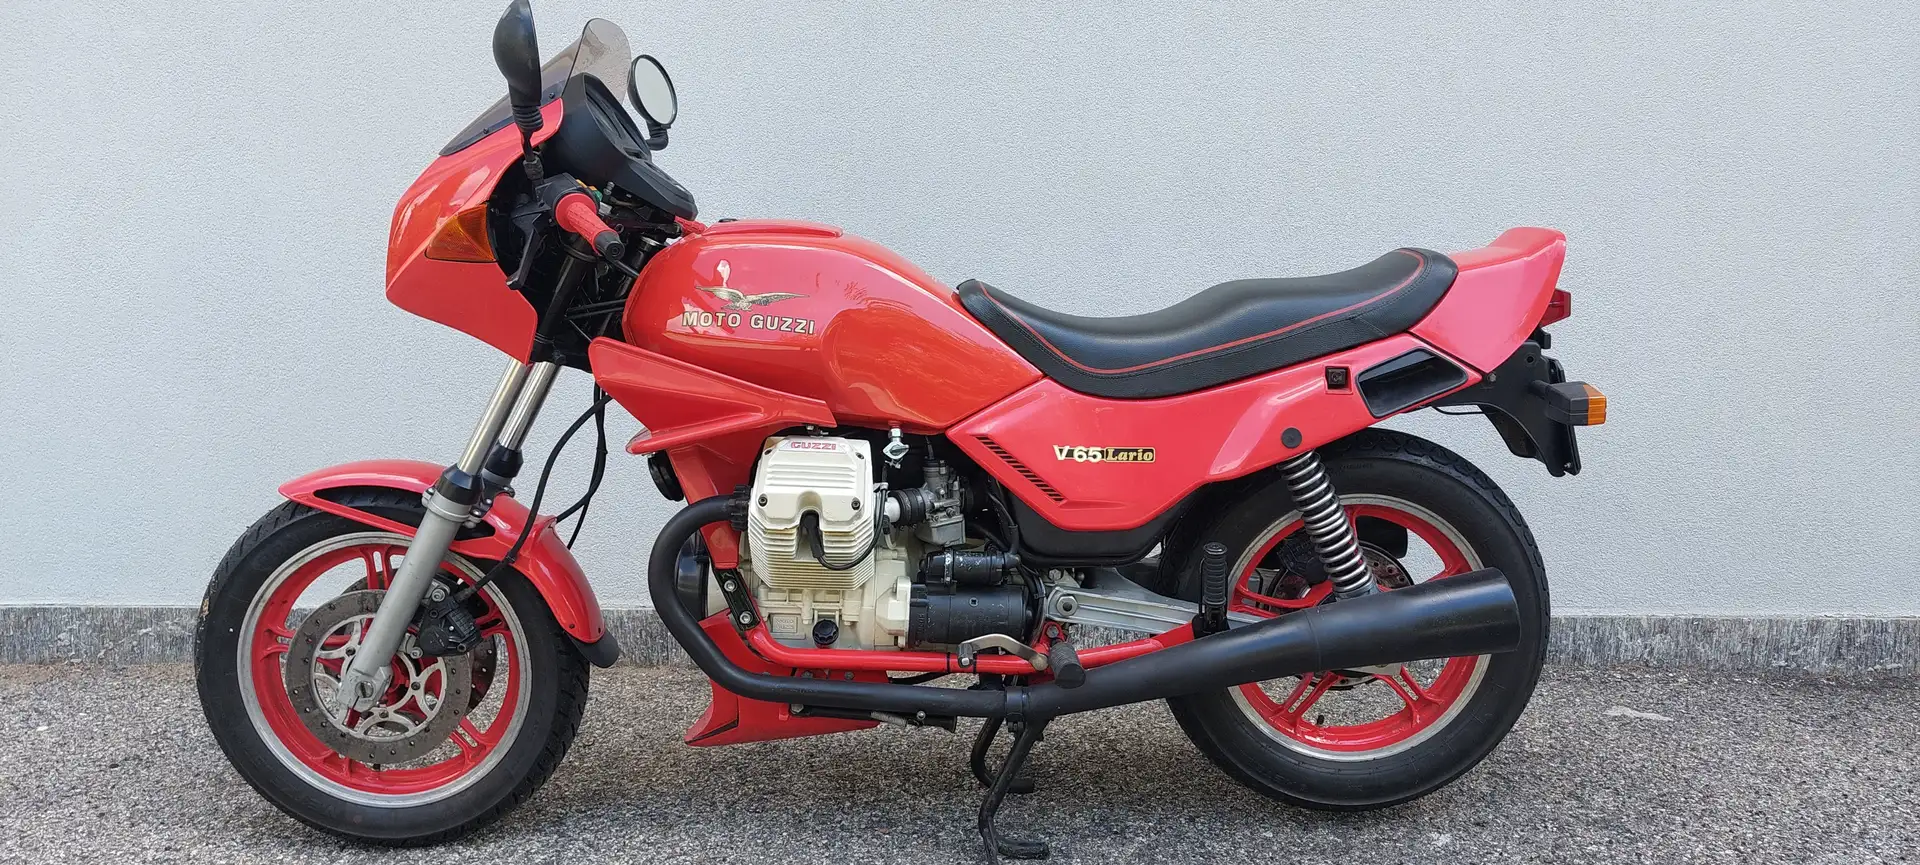 Moto Guzzi V 65 Lario Rouge - 2